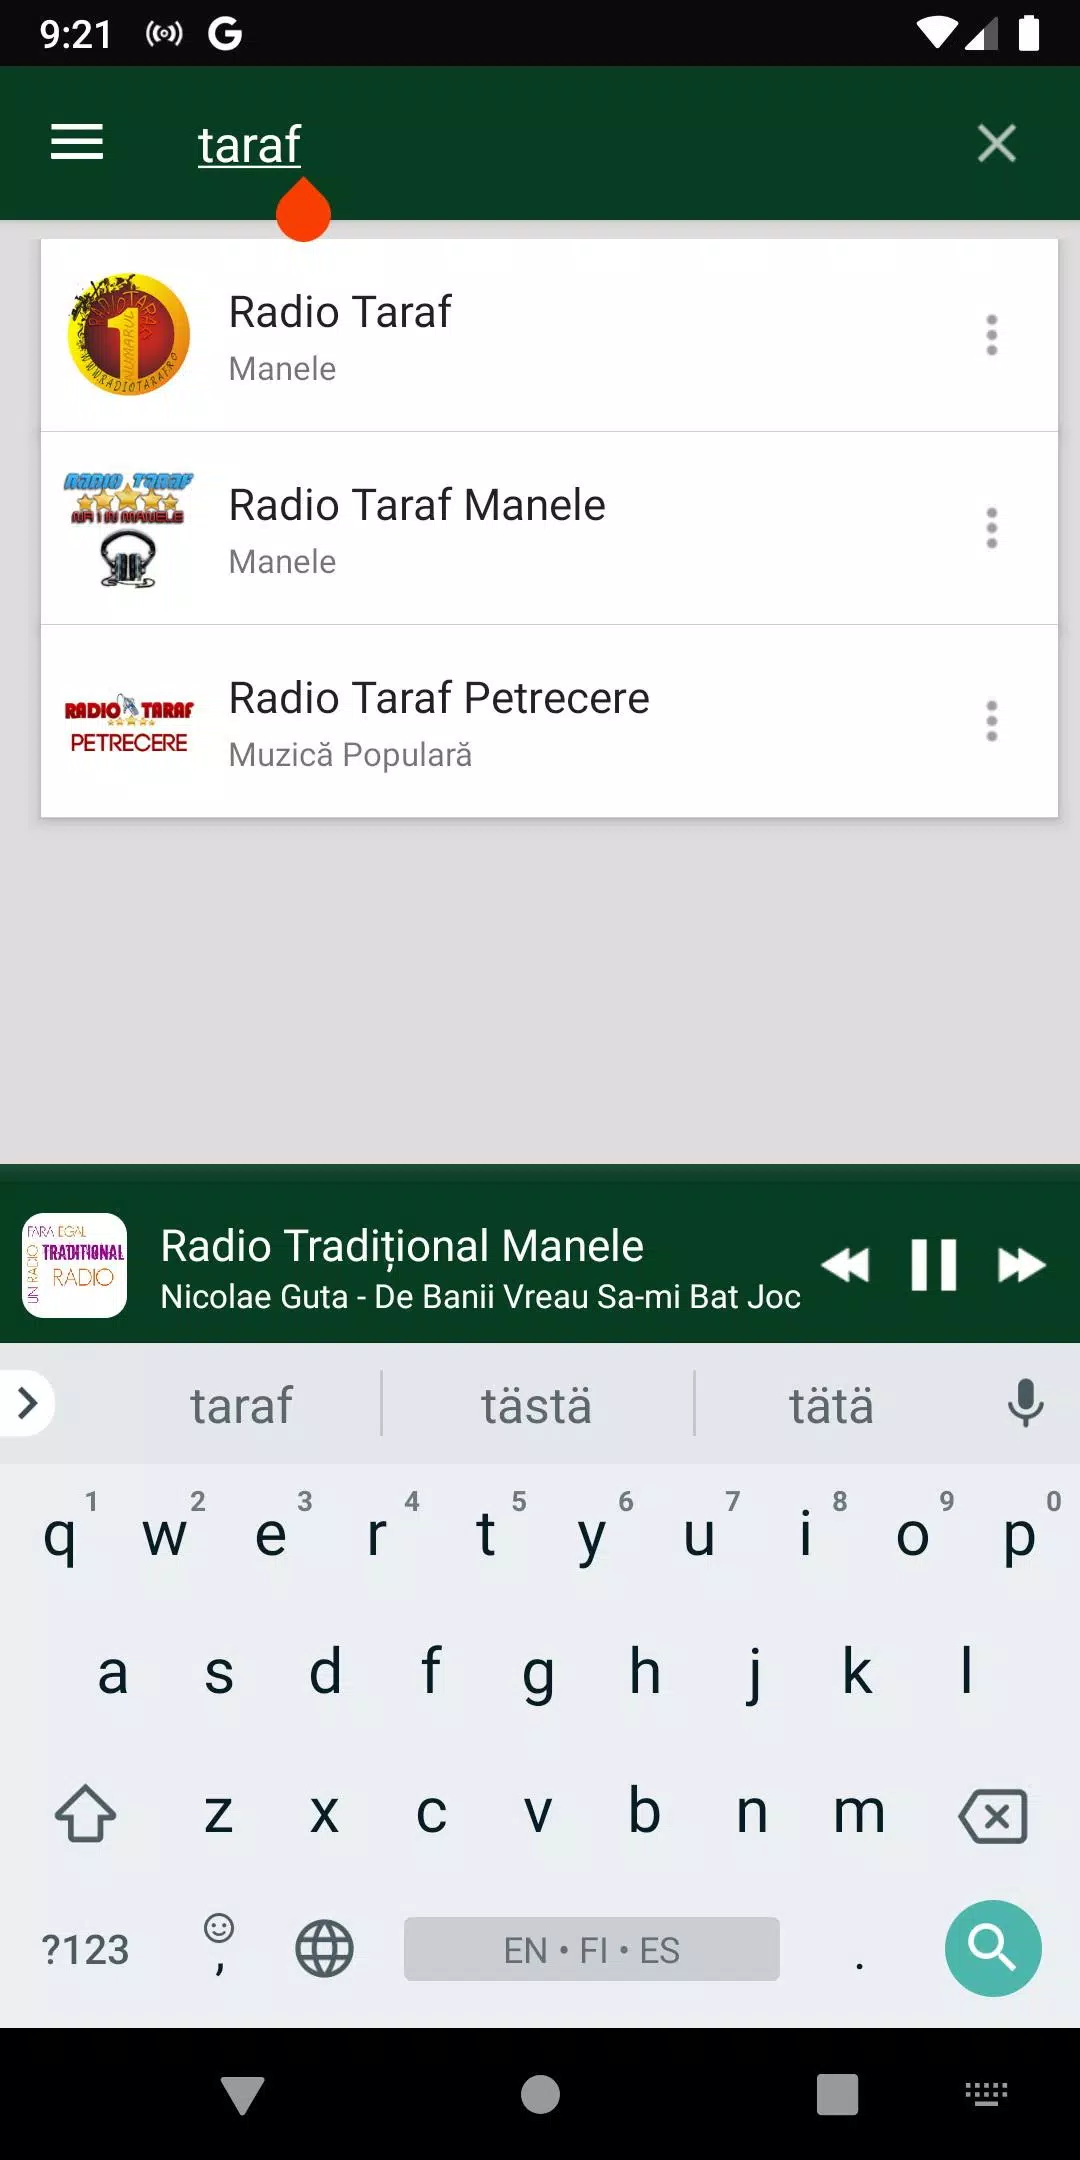 Radiouri Muzică Petrecere APK for Android Download